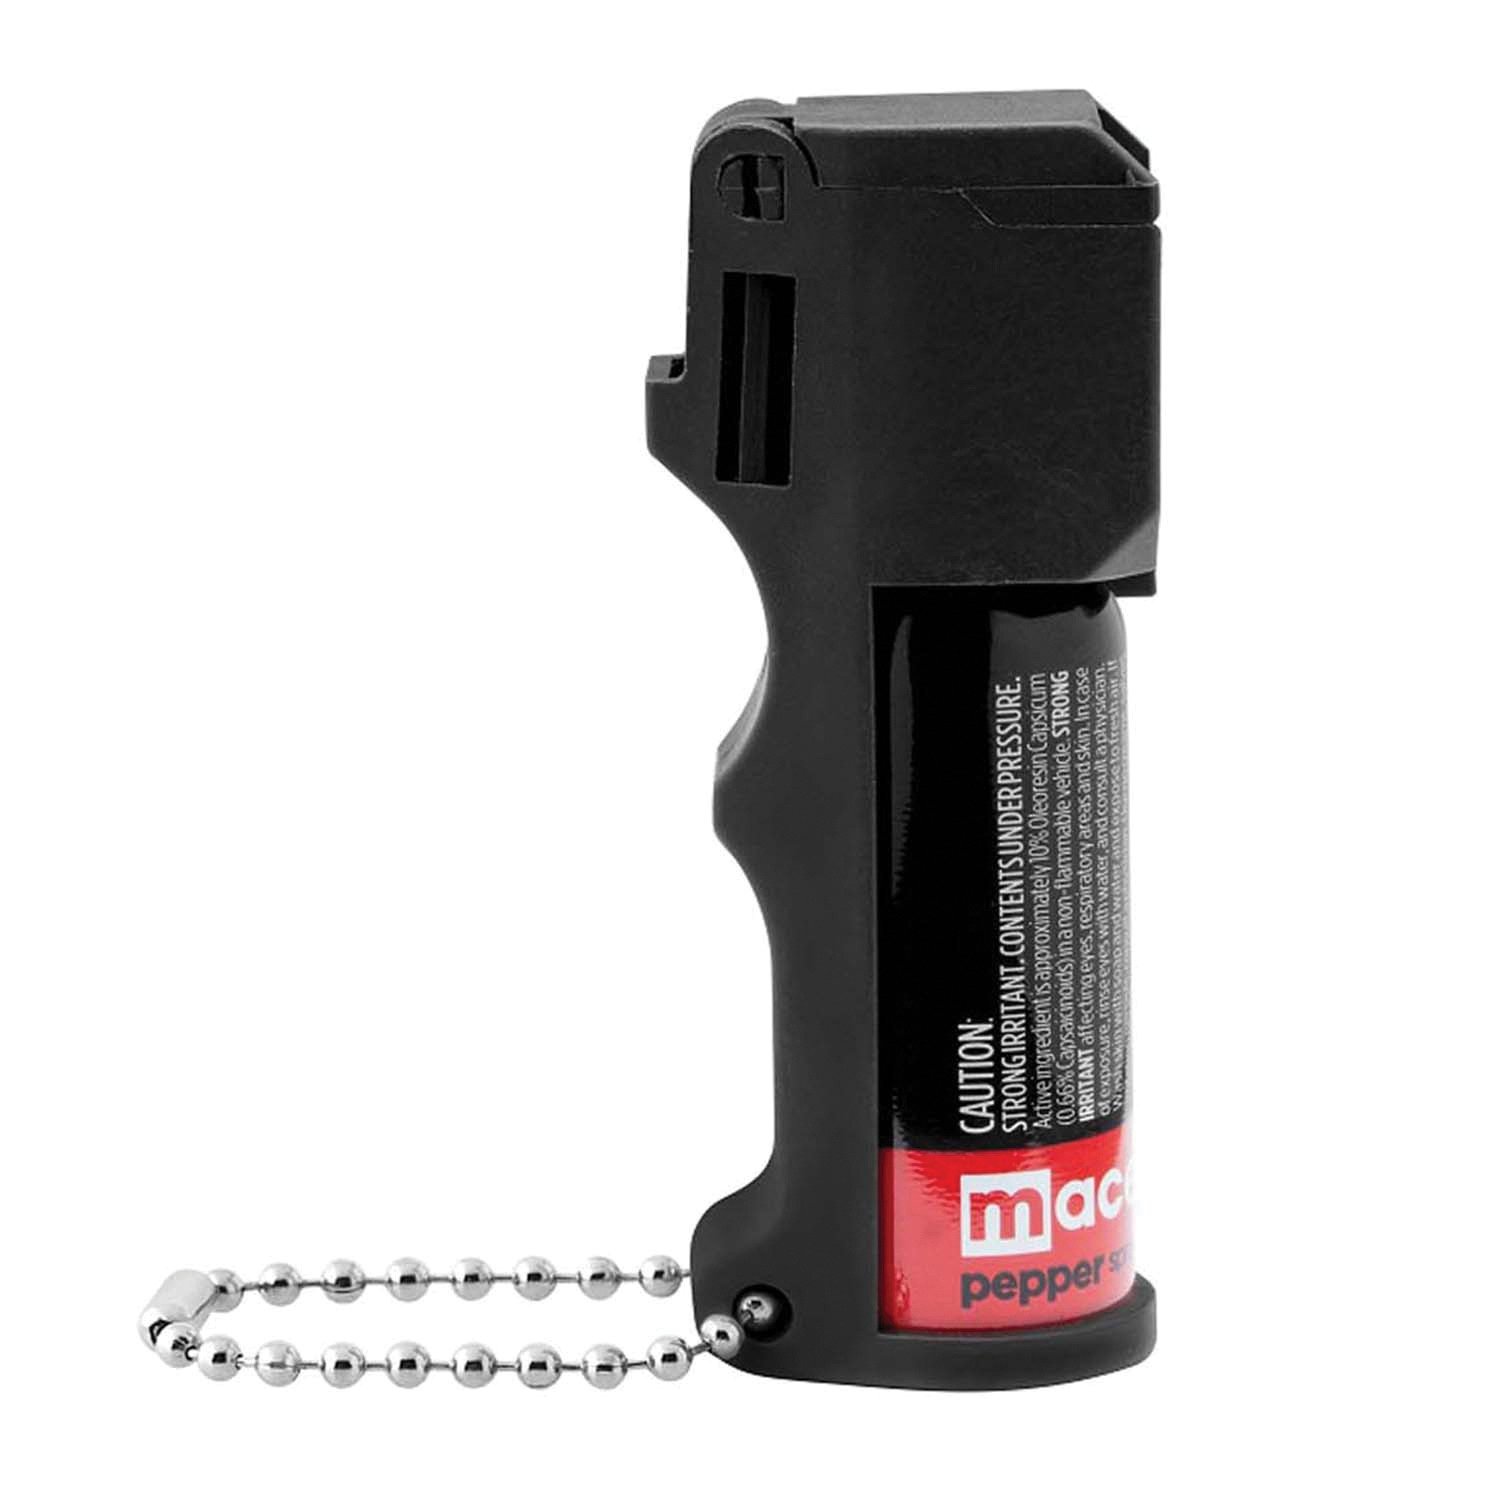 MACE 80745 Pocket Pepper Spray (Black)